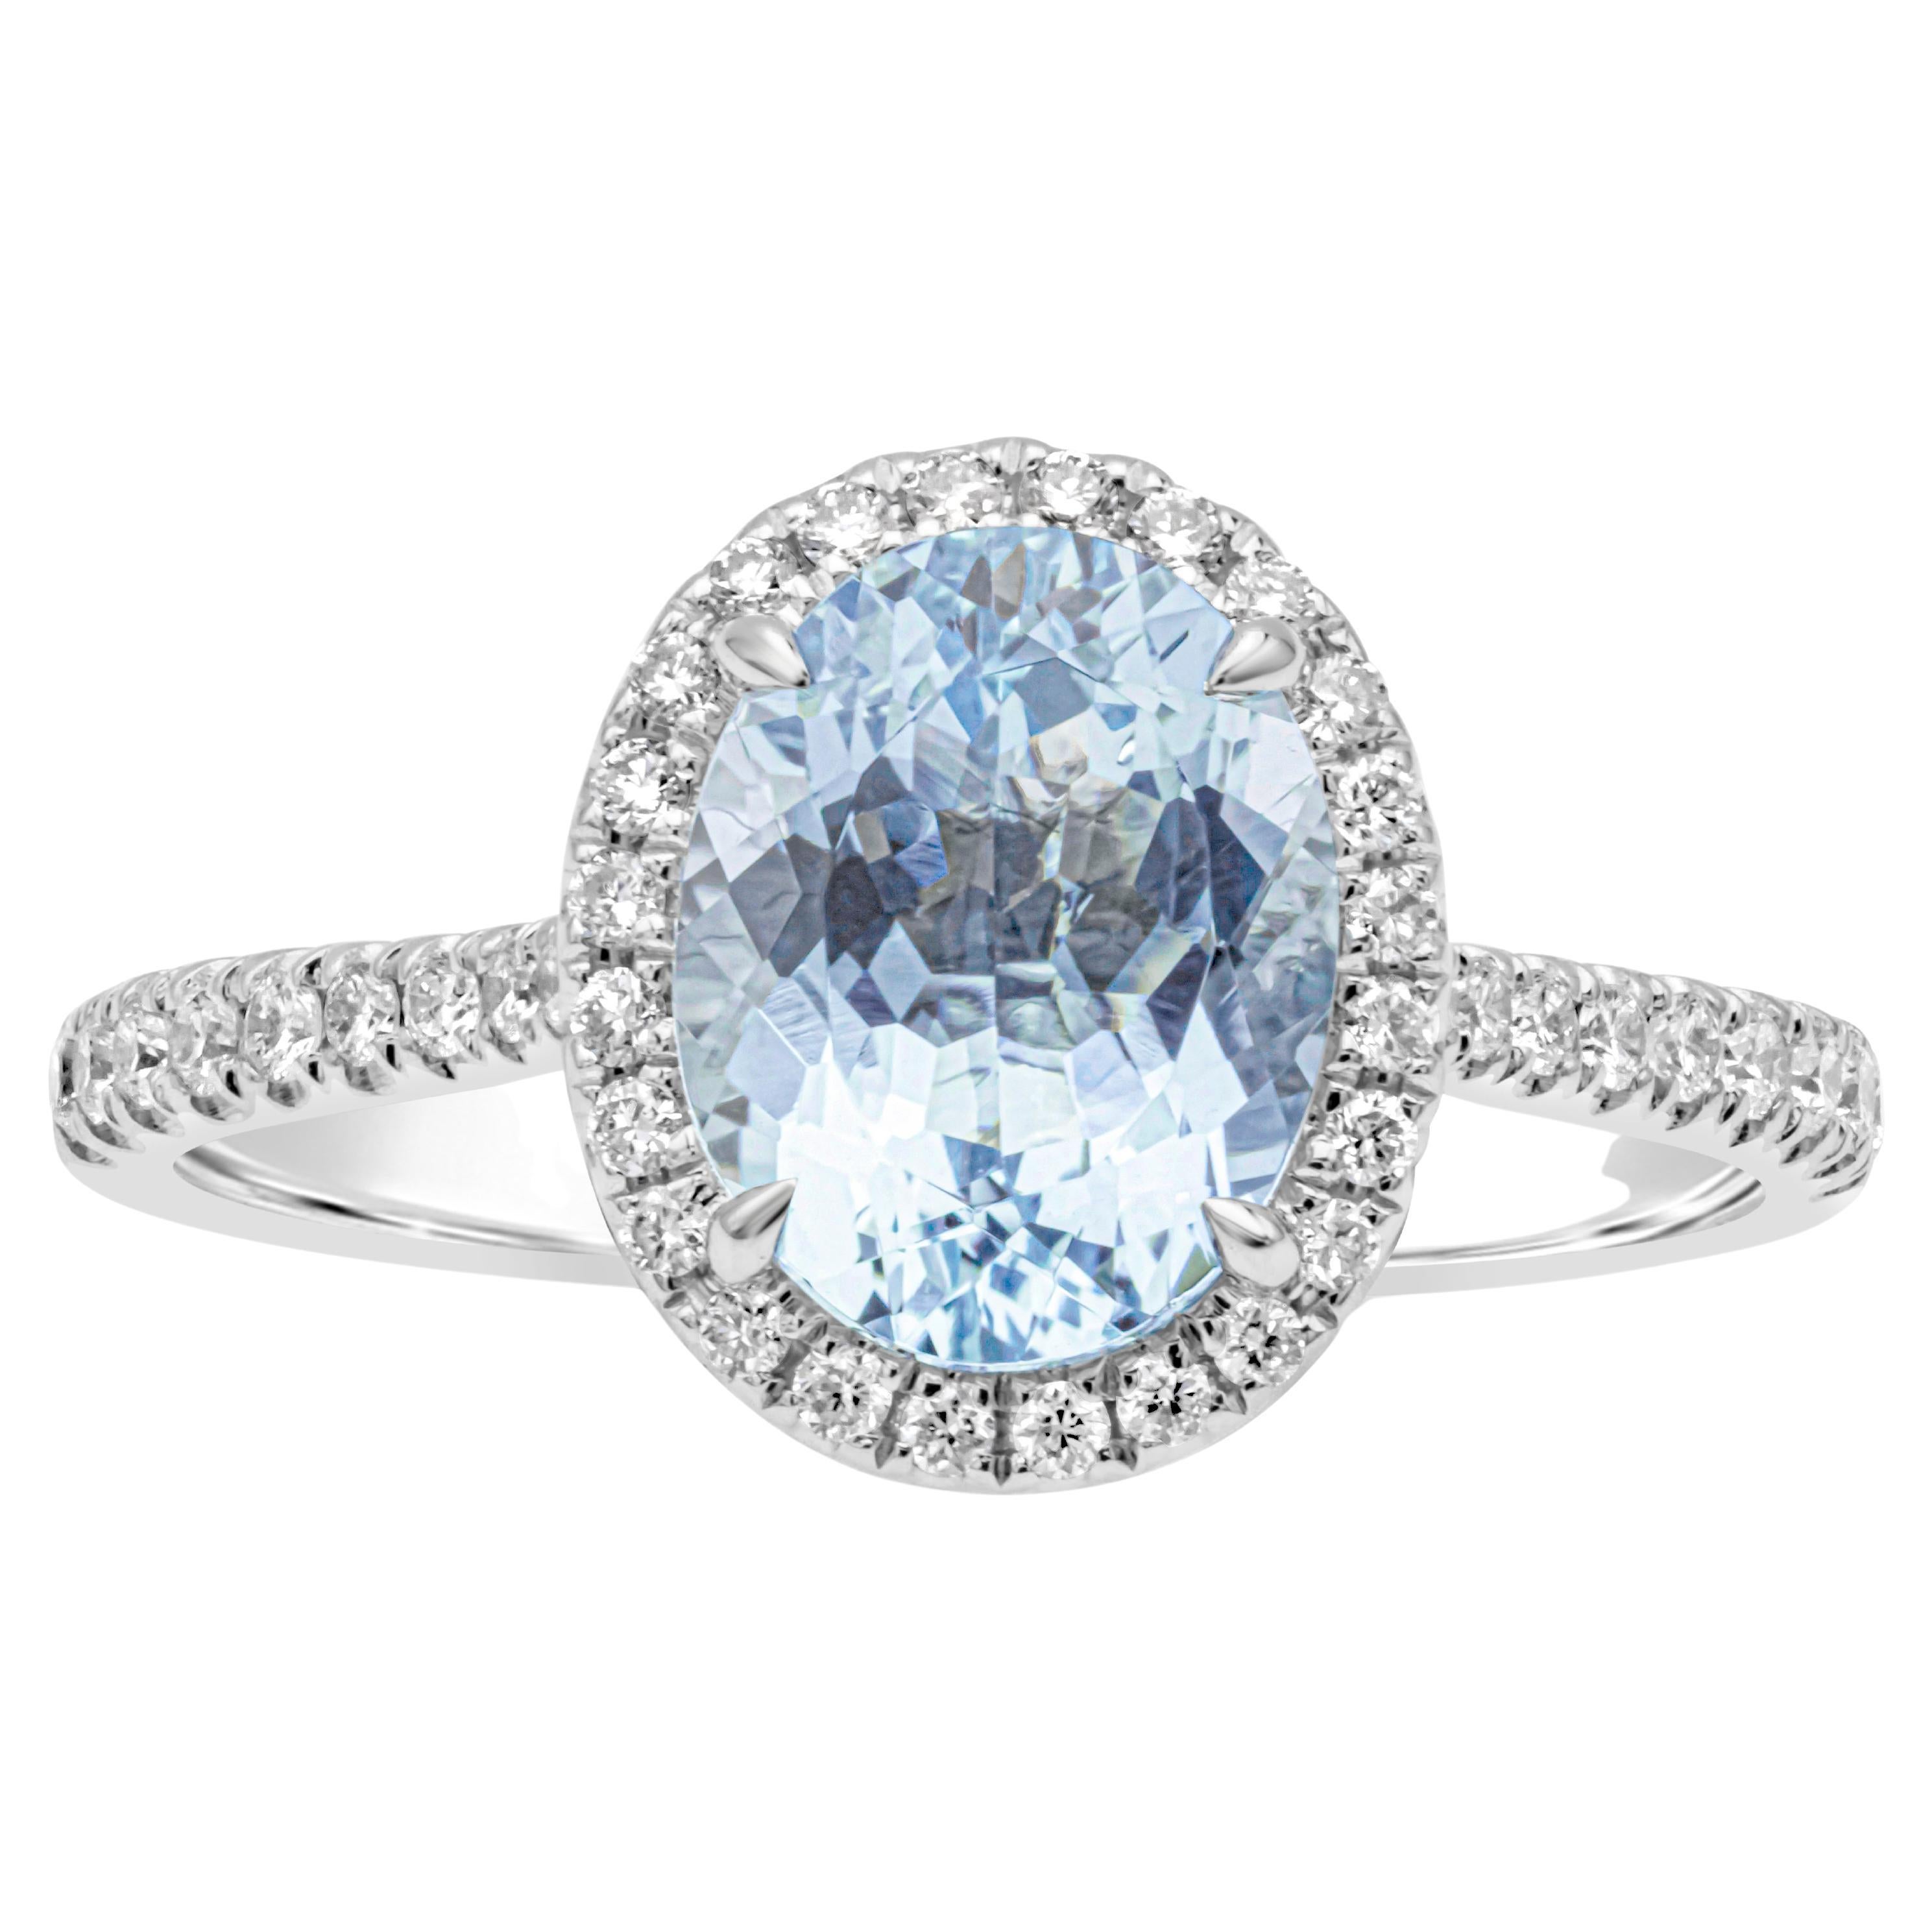 Roman Malakov 1.69 Carat Oval Cut Blue Aquamarine & Diamond Halo Engagement Ring